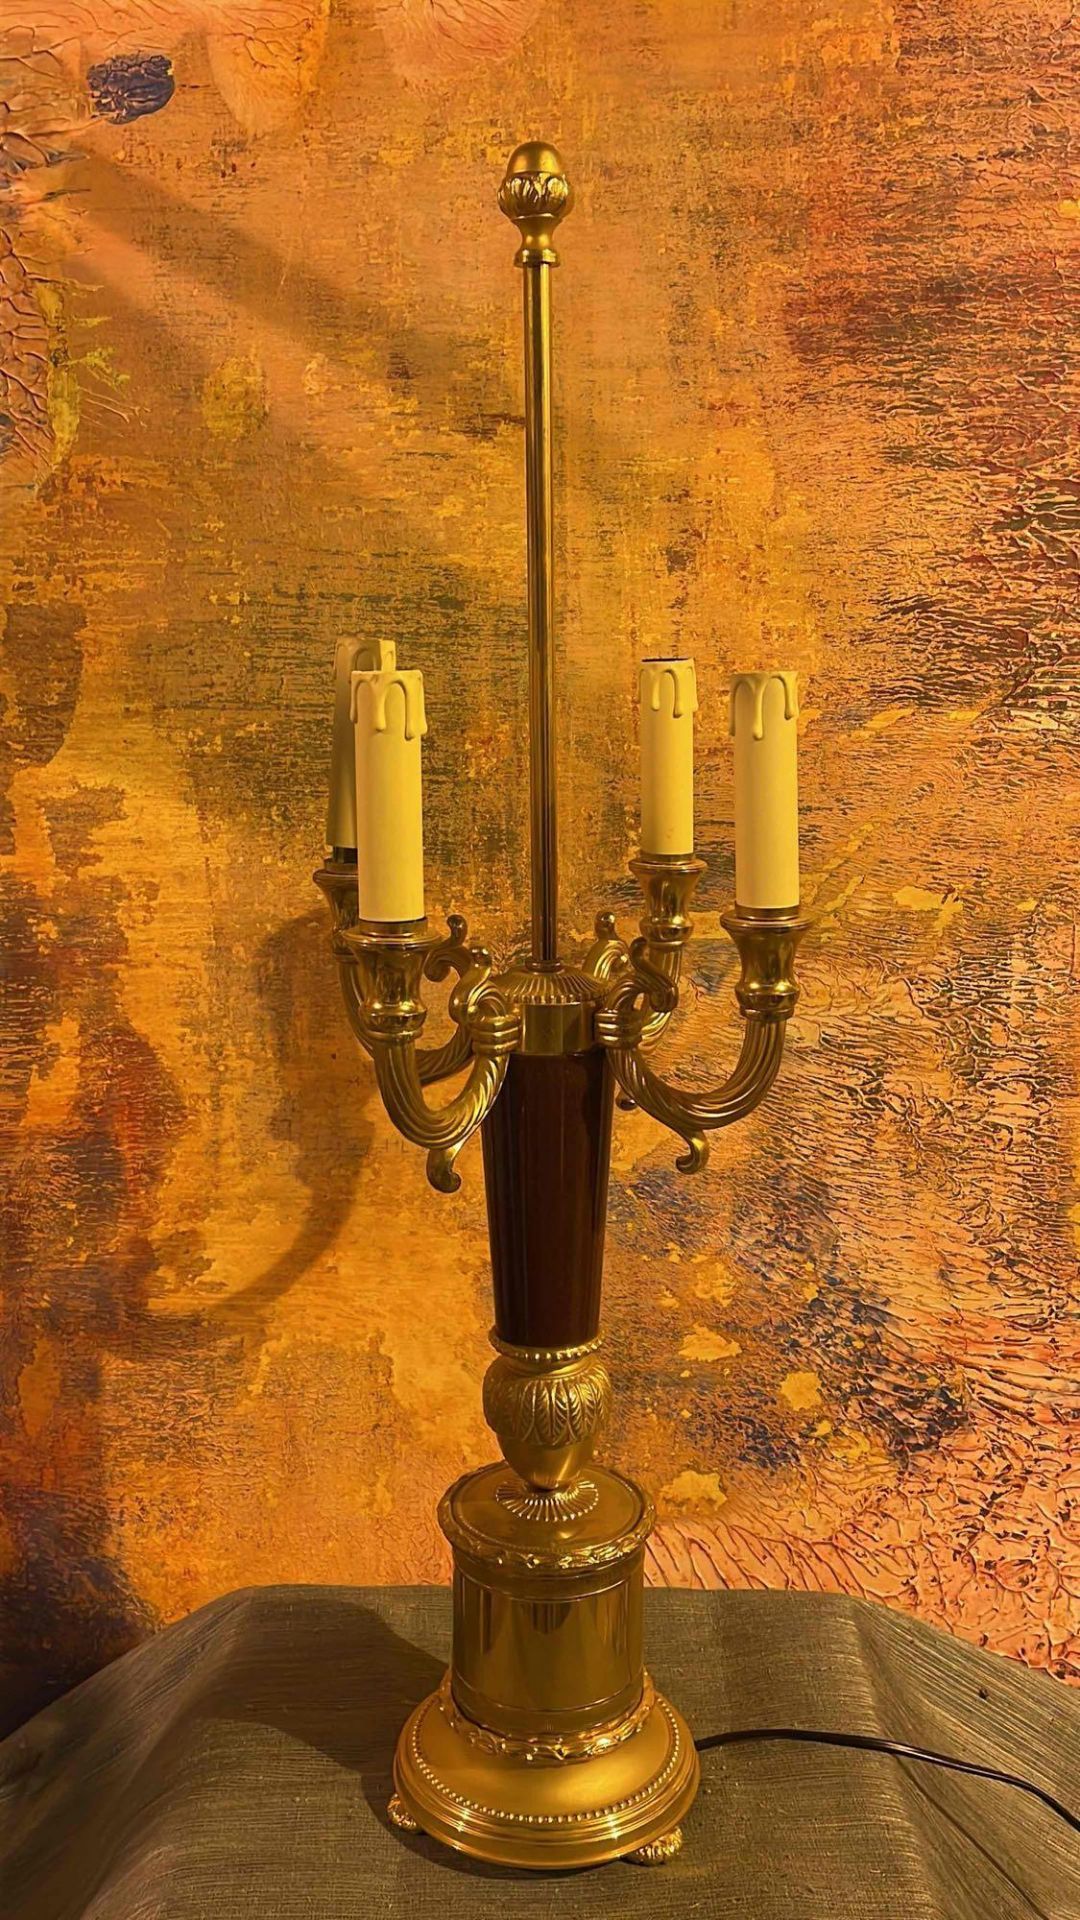 Laudarte S.R.L Mod. Pandora Gold And Burgundy Table Lamp 76cm Giovanni Maria Malerba Di Busca - - Bild 4 aus 5